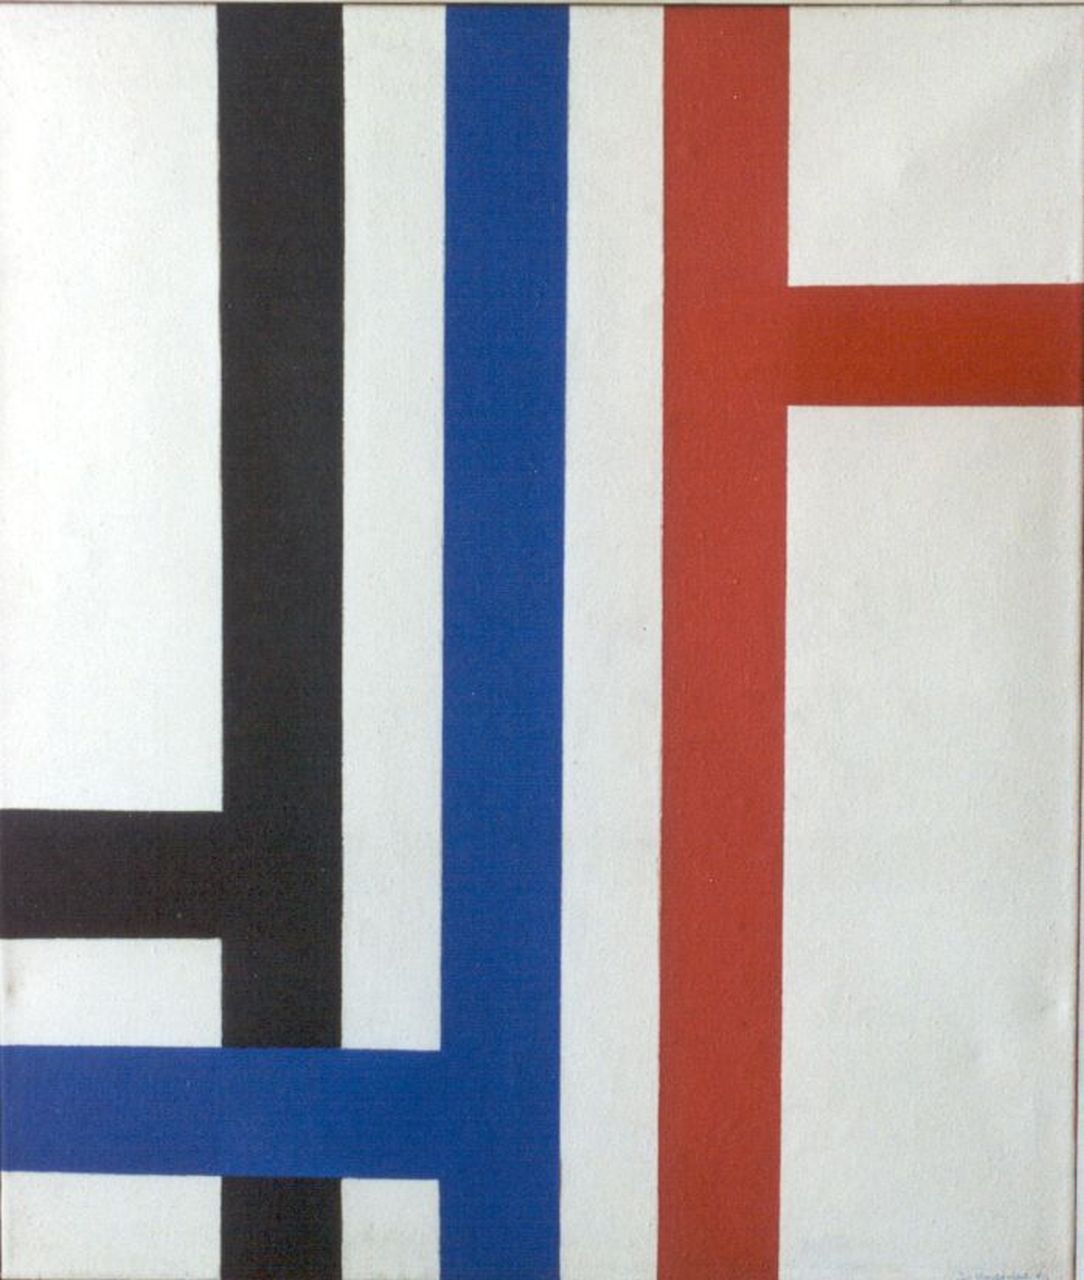 Vreugdenhil J.  | Johannes 'Joop' Vreugdenhil, T 2, olieverf op doek 130,0 x 110,0 cm, gesigneerd rechtsonder en gedateerd '67